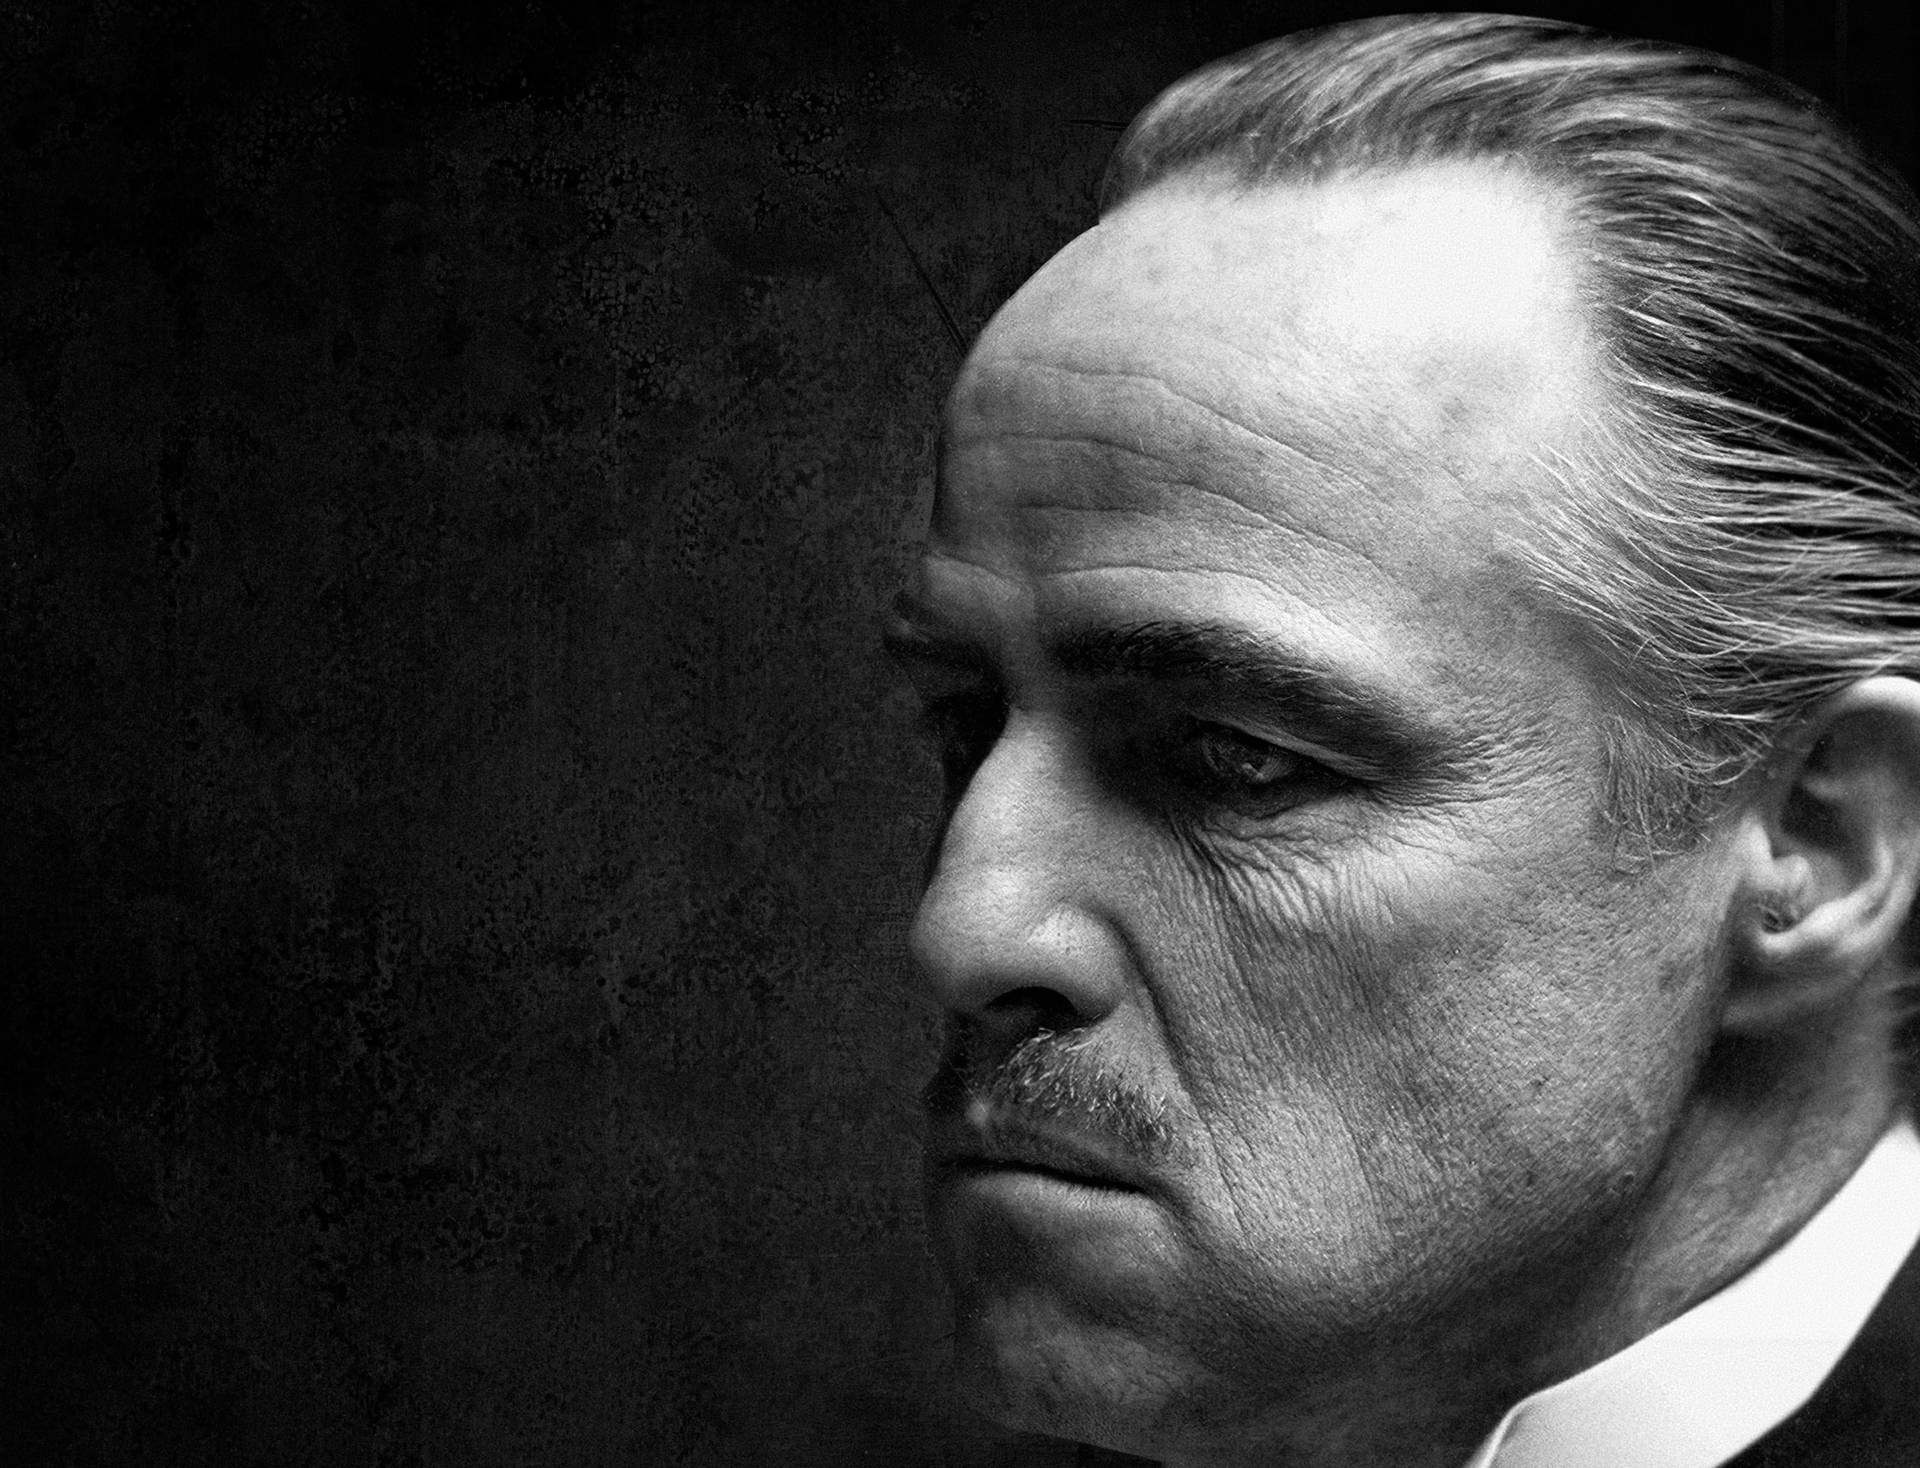 Marlon Brando Godfather Trilogie tema vægpaneler. Wallpaper